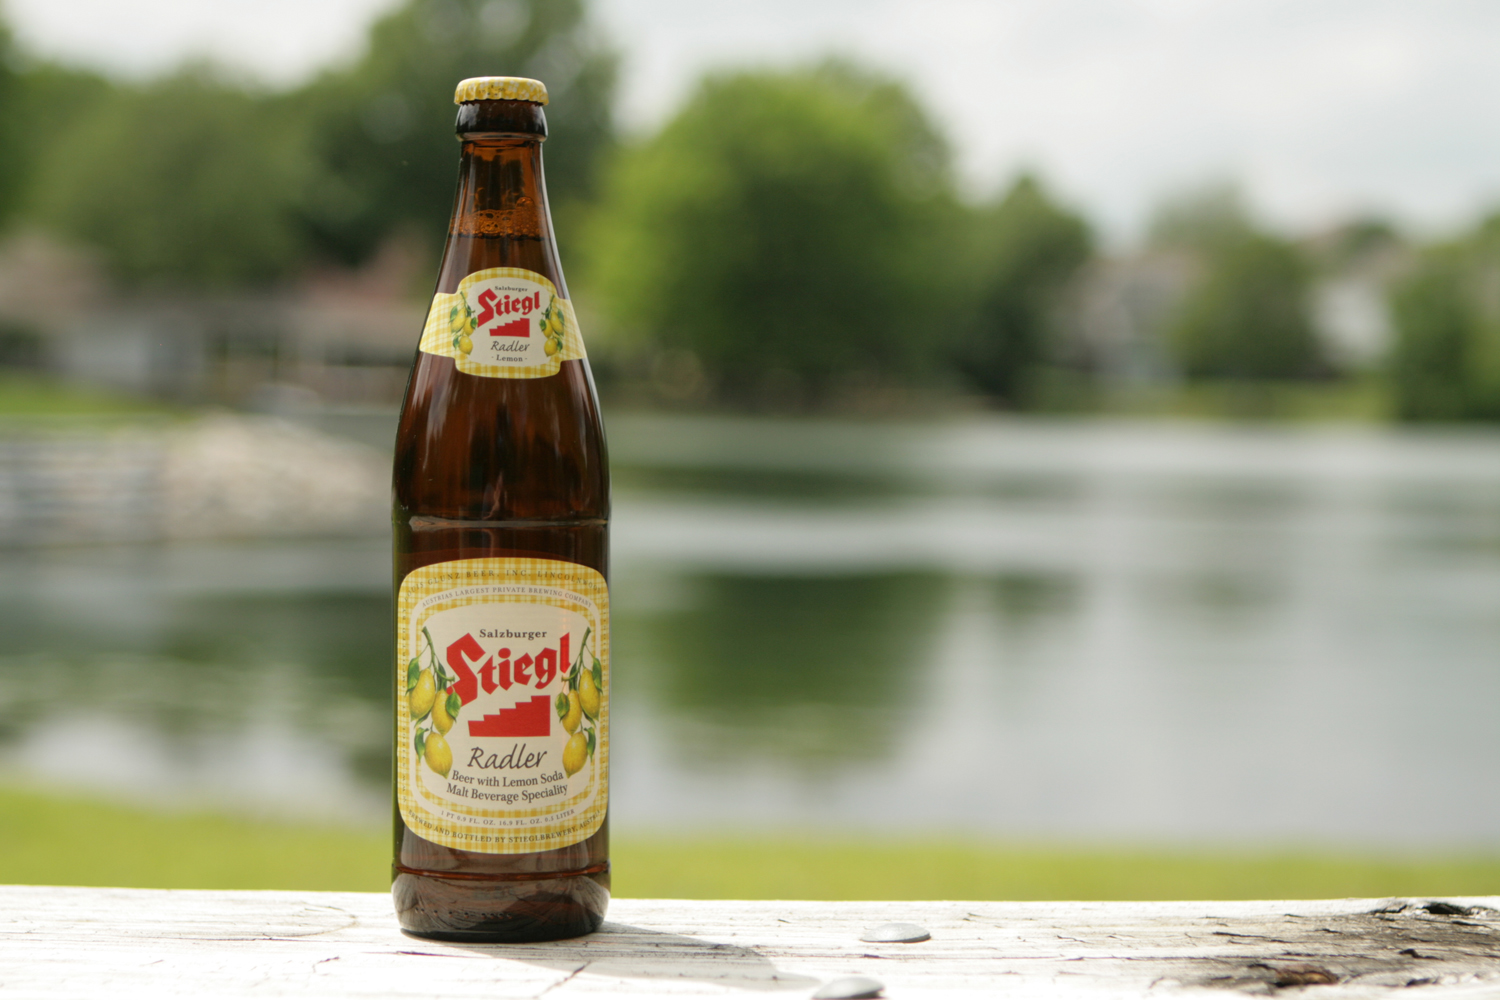 Find Stiegl's delicious fruit lemon radler beer this summer.